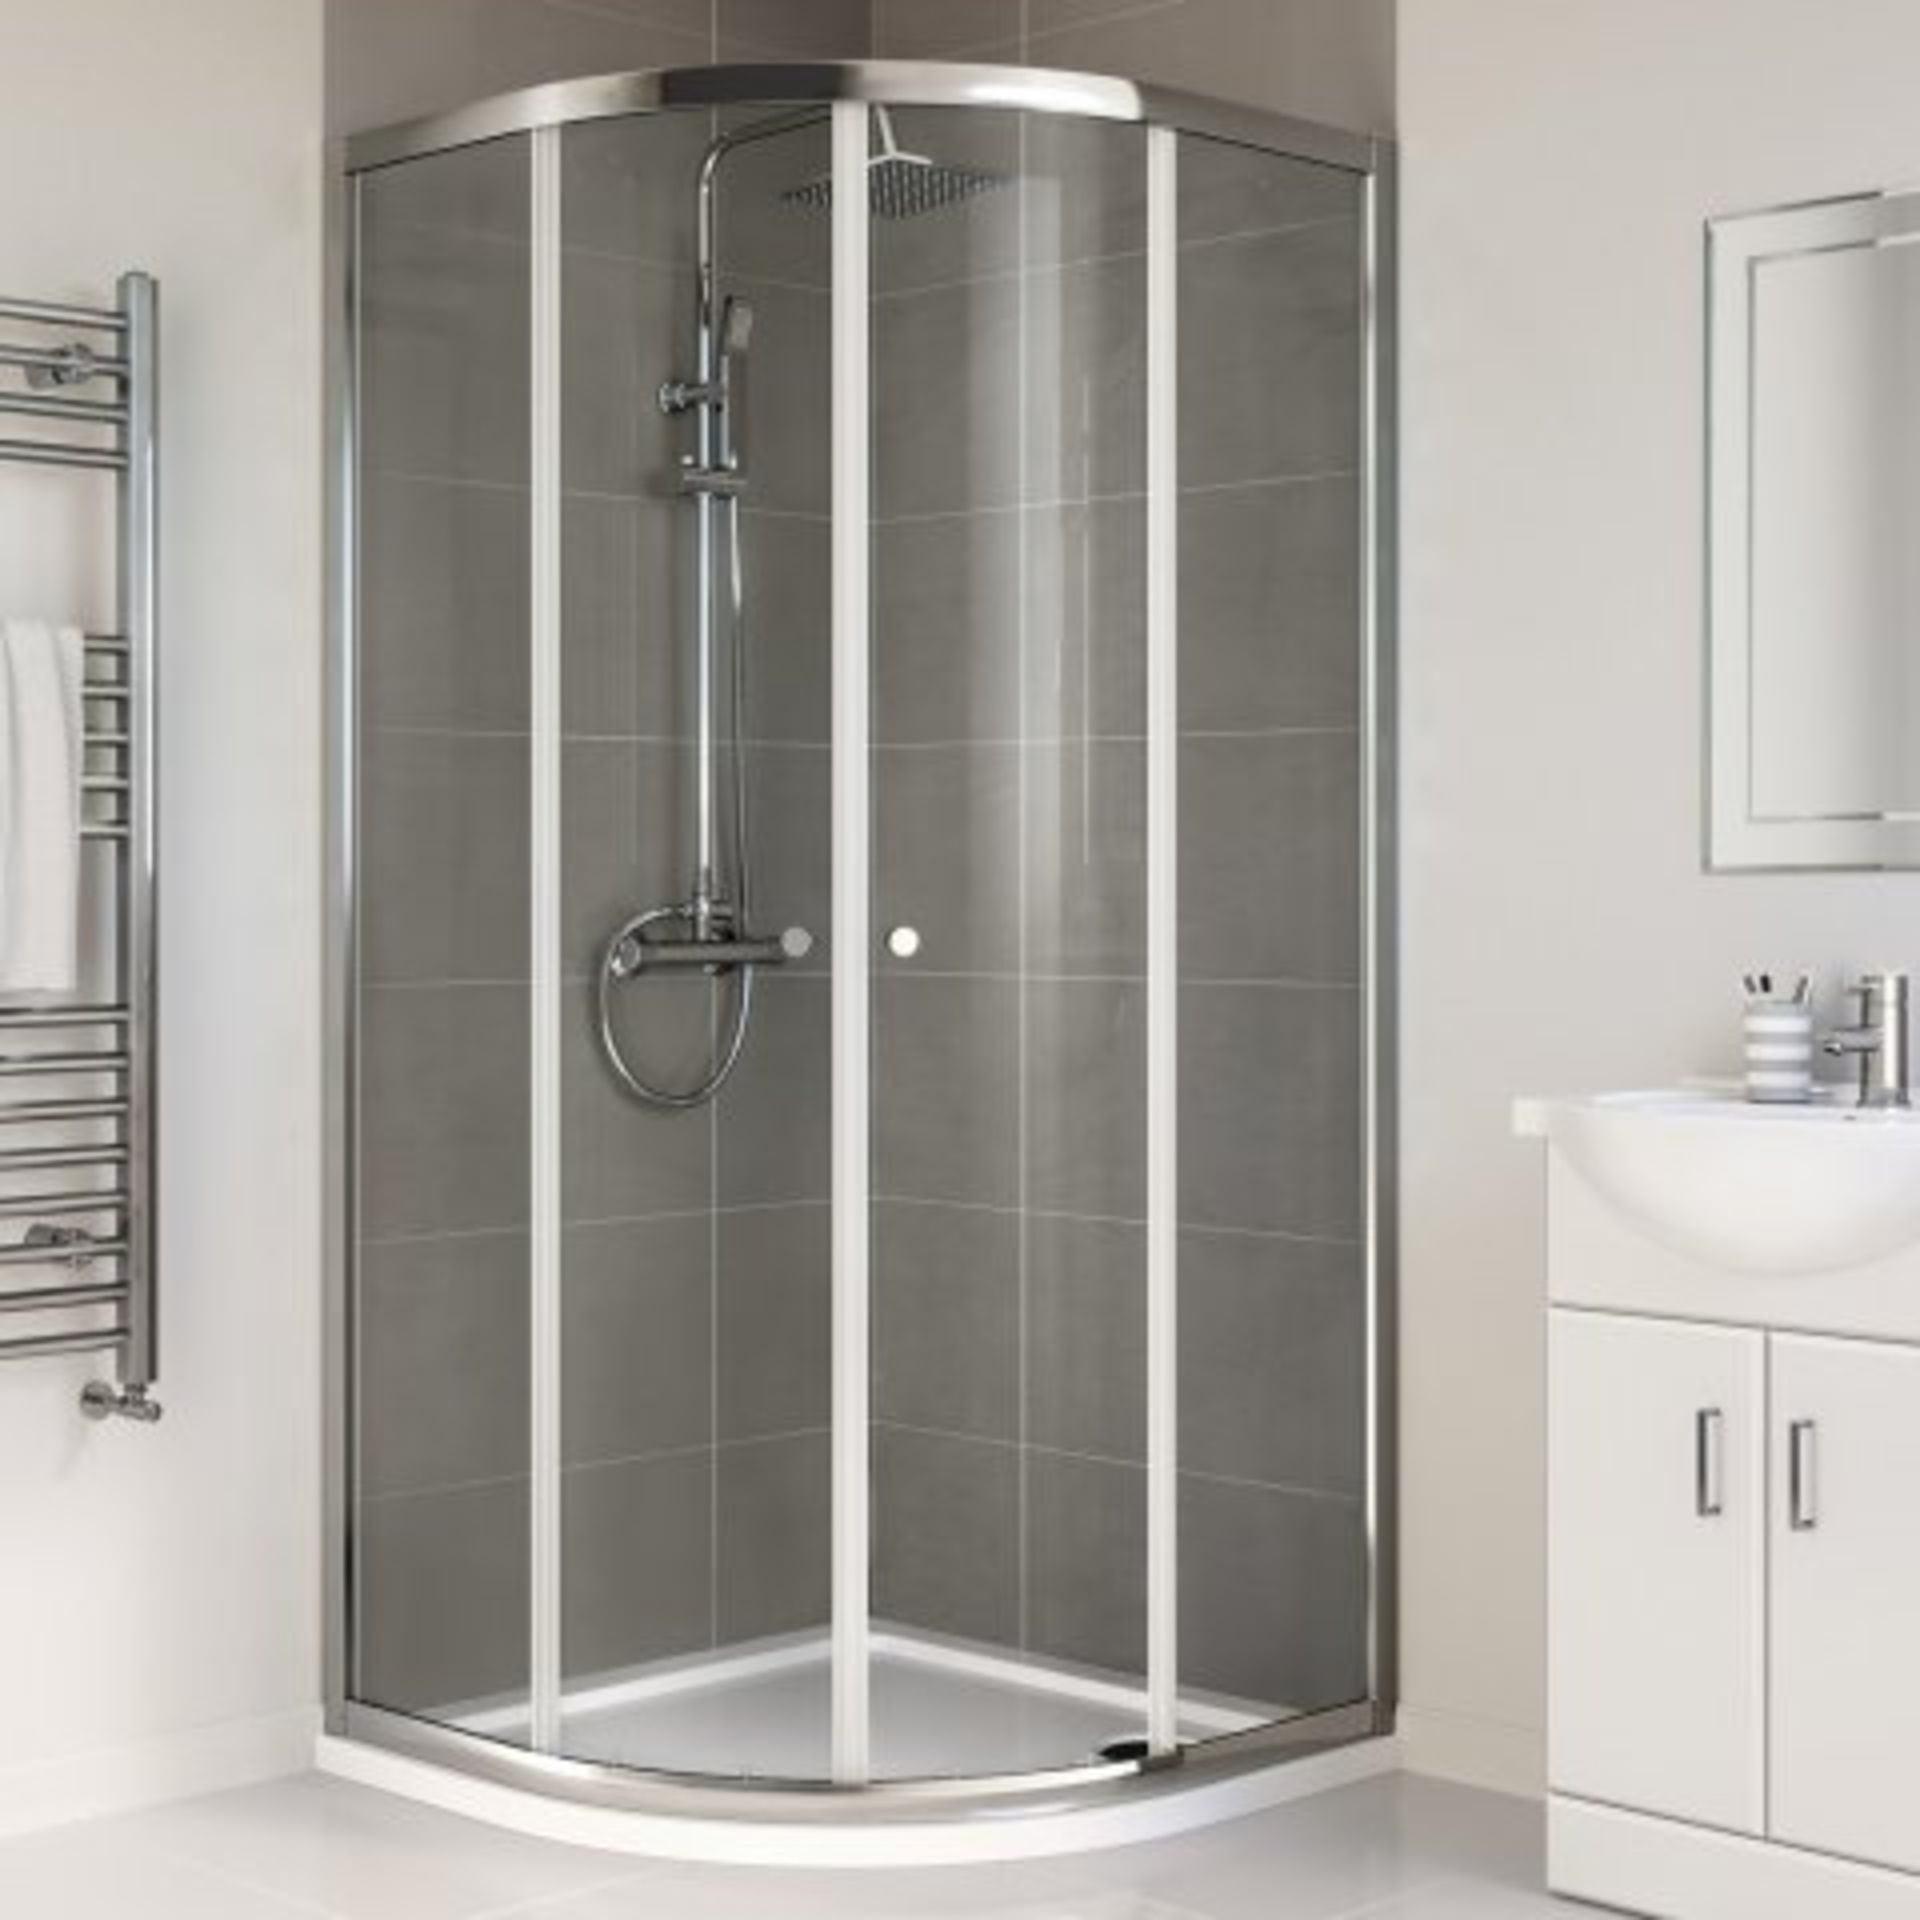 (W142) 900x900mm - Elements Quadrant Shower Enclosure. RRP £229.99. Budget Solution Our entry